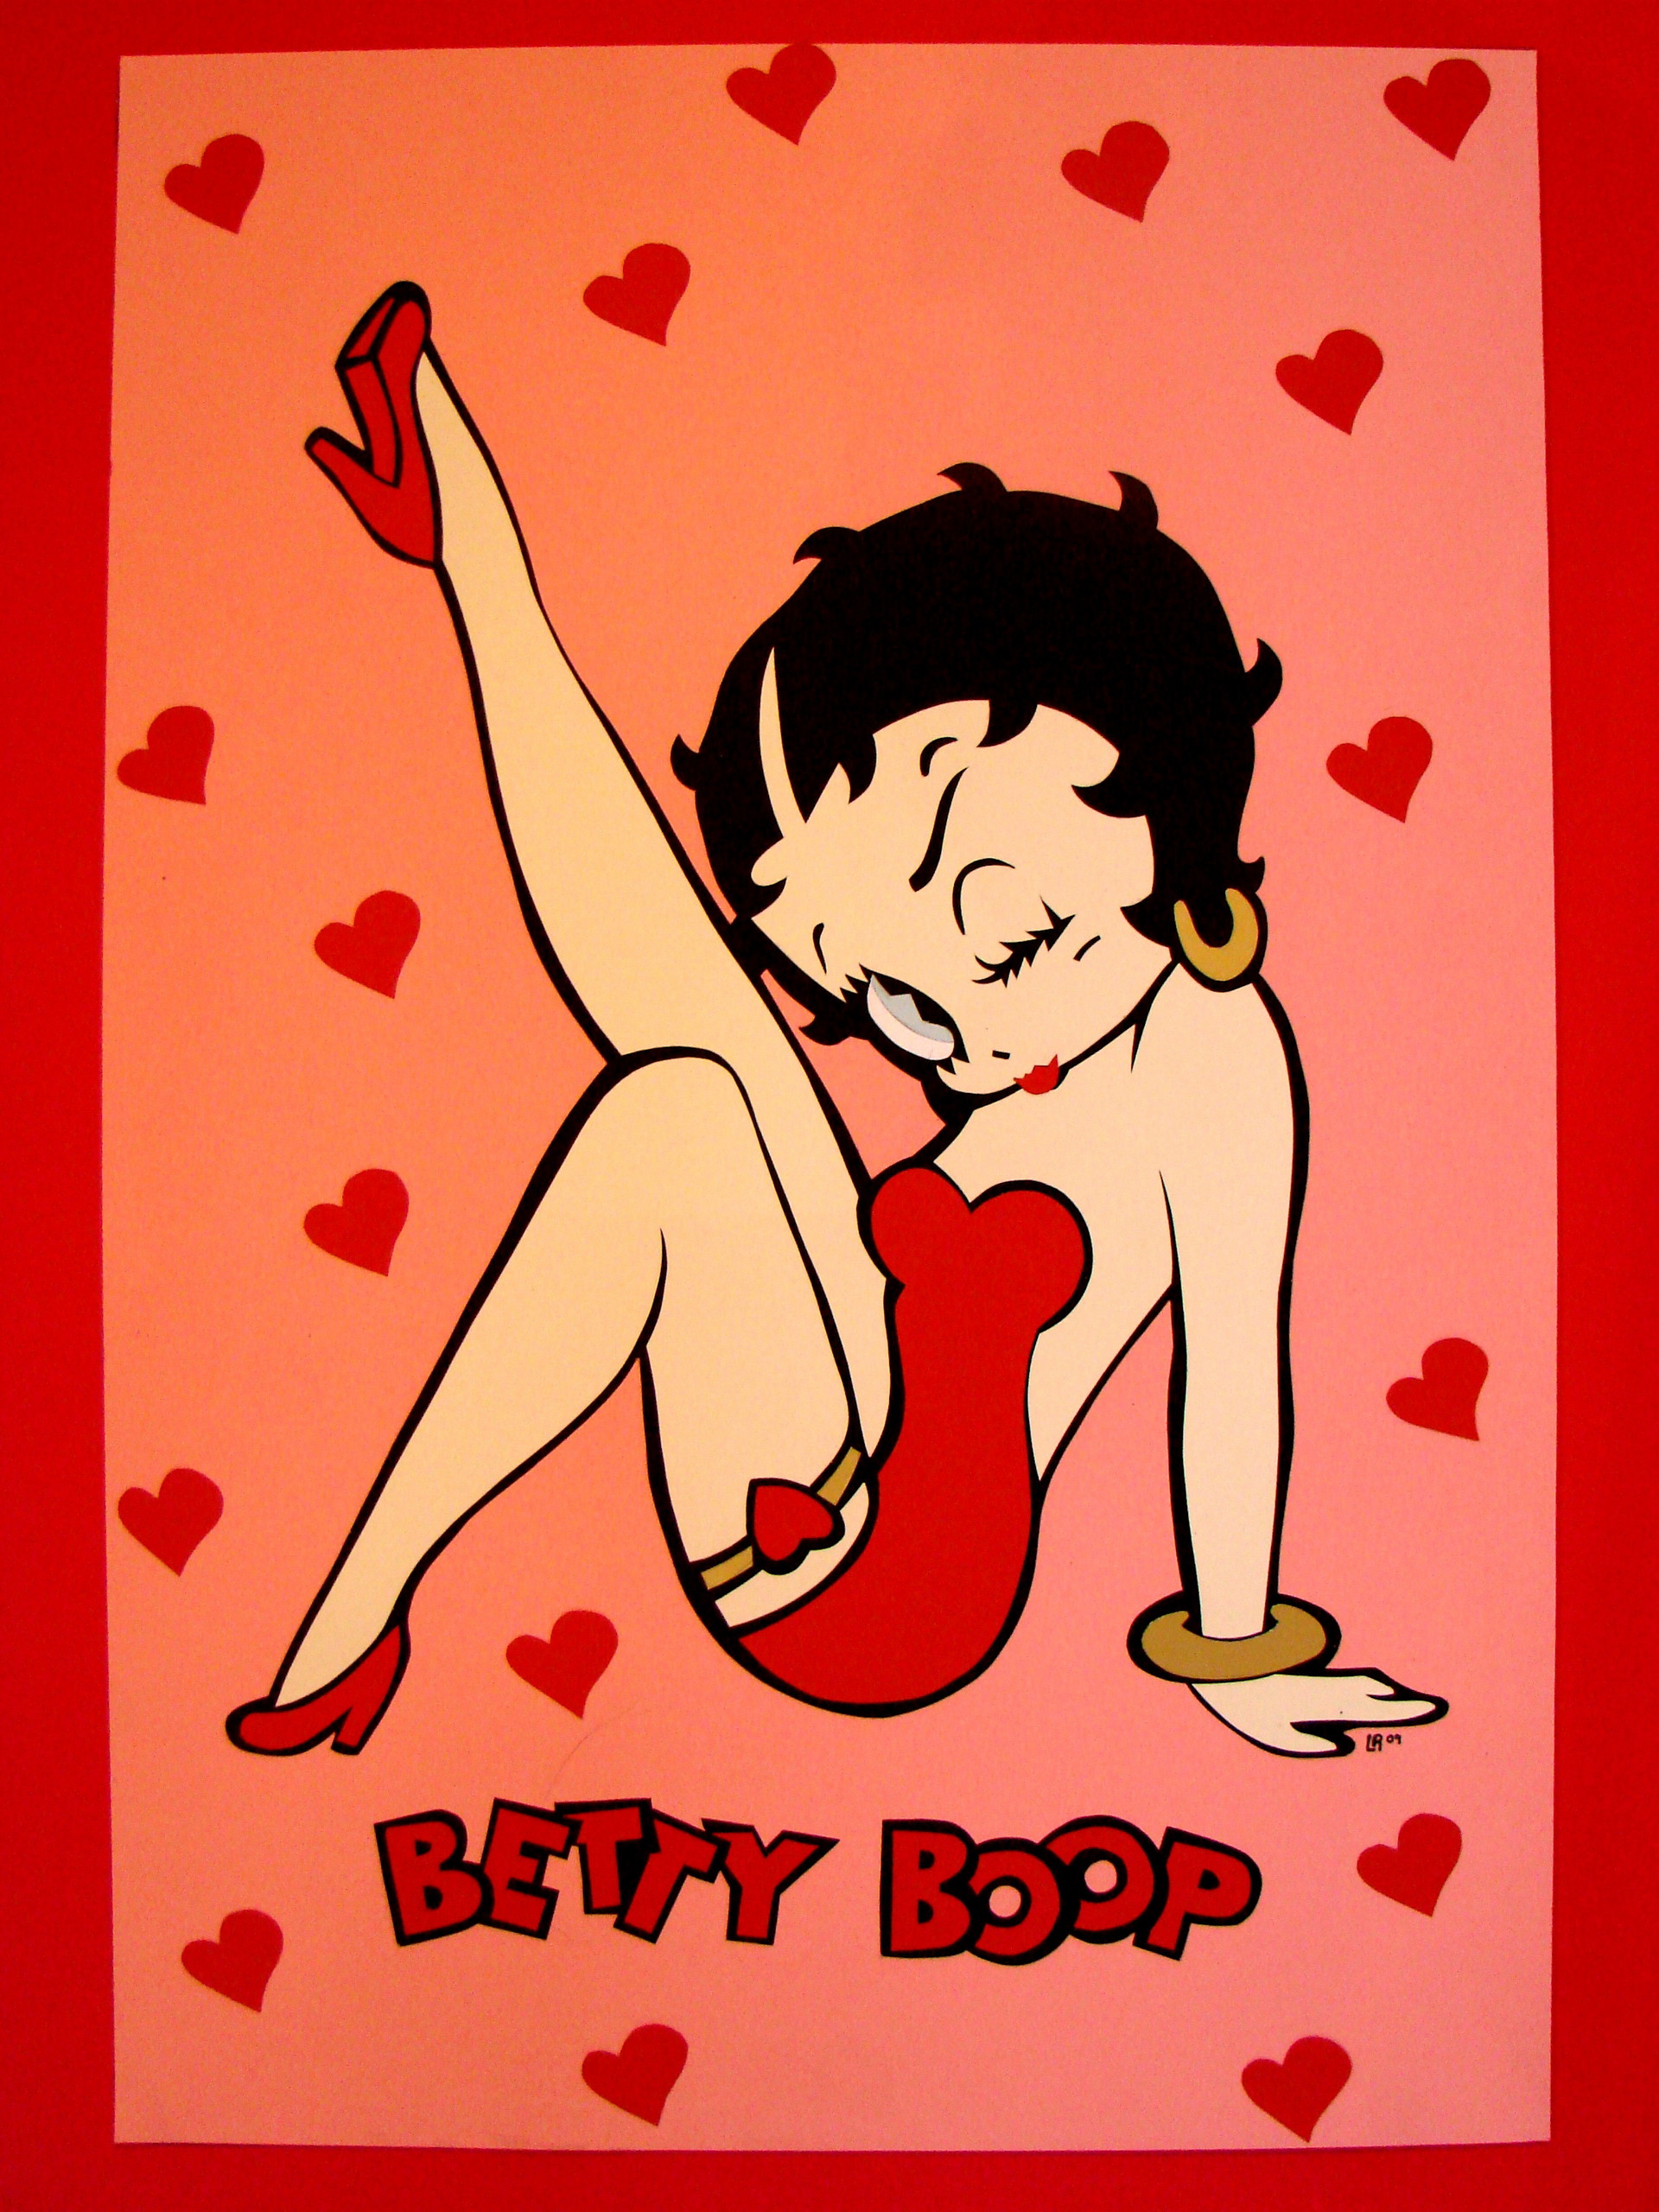 Betty Boop Image Wallpaper Photos